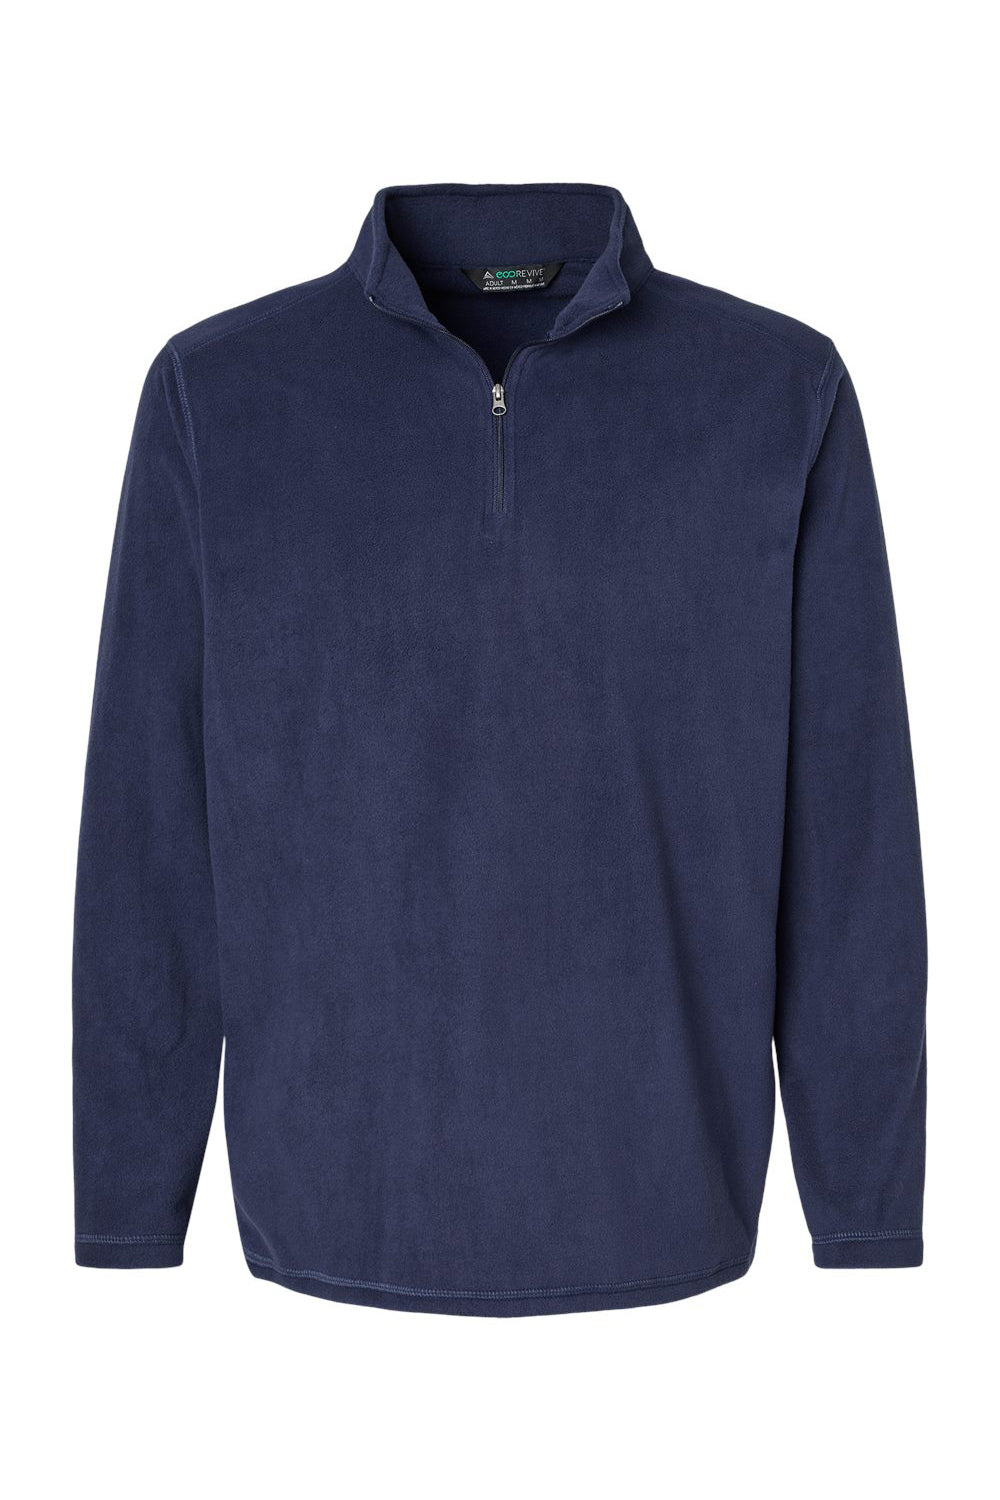 Augusta Sportswear 6863 Mens Eco Revive Micro Lite Fleece 1/4 Zip Sweatshirt Navy Blue Flat Front